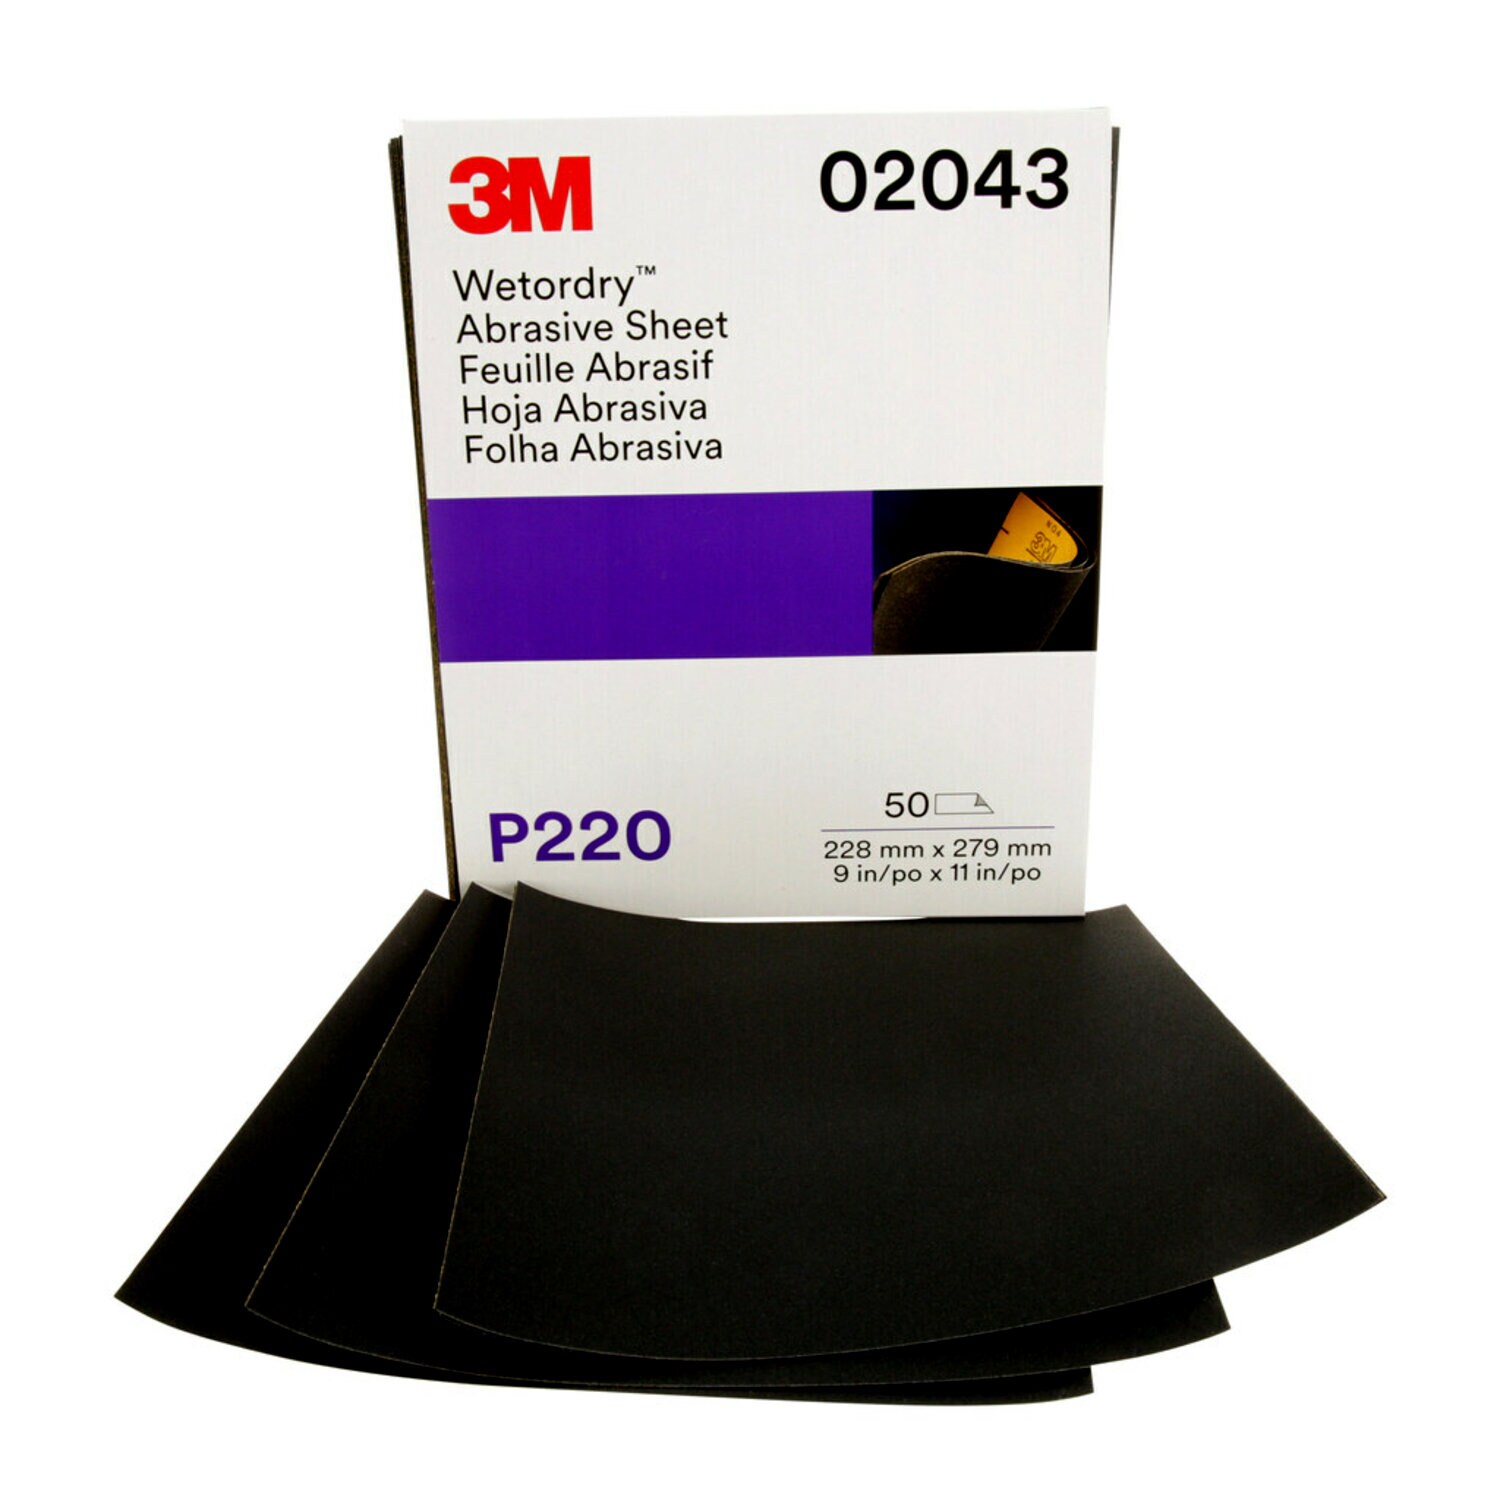 7000120115 - 3M Wetordry Abrasive Sheet, 02043, P220, 9 in x 11 in, 50 sheets per
carton, 5 cartons per case